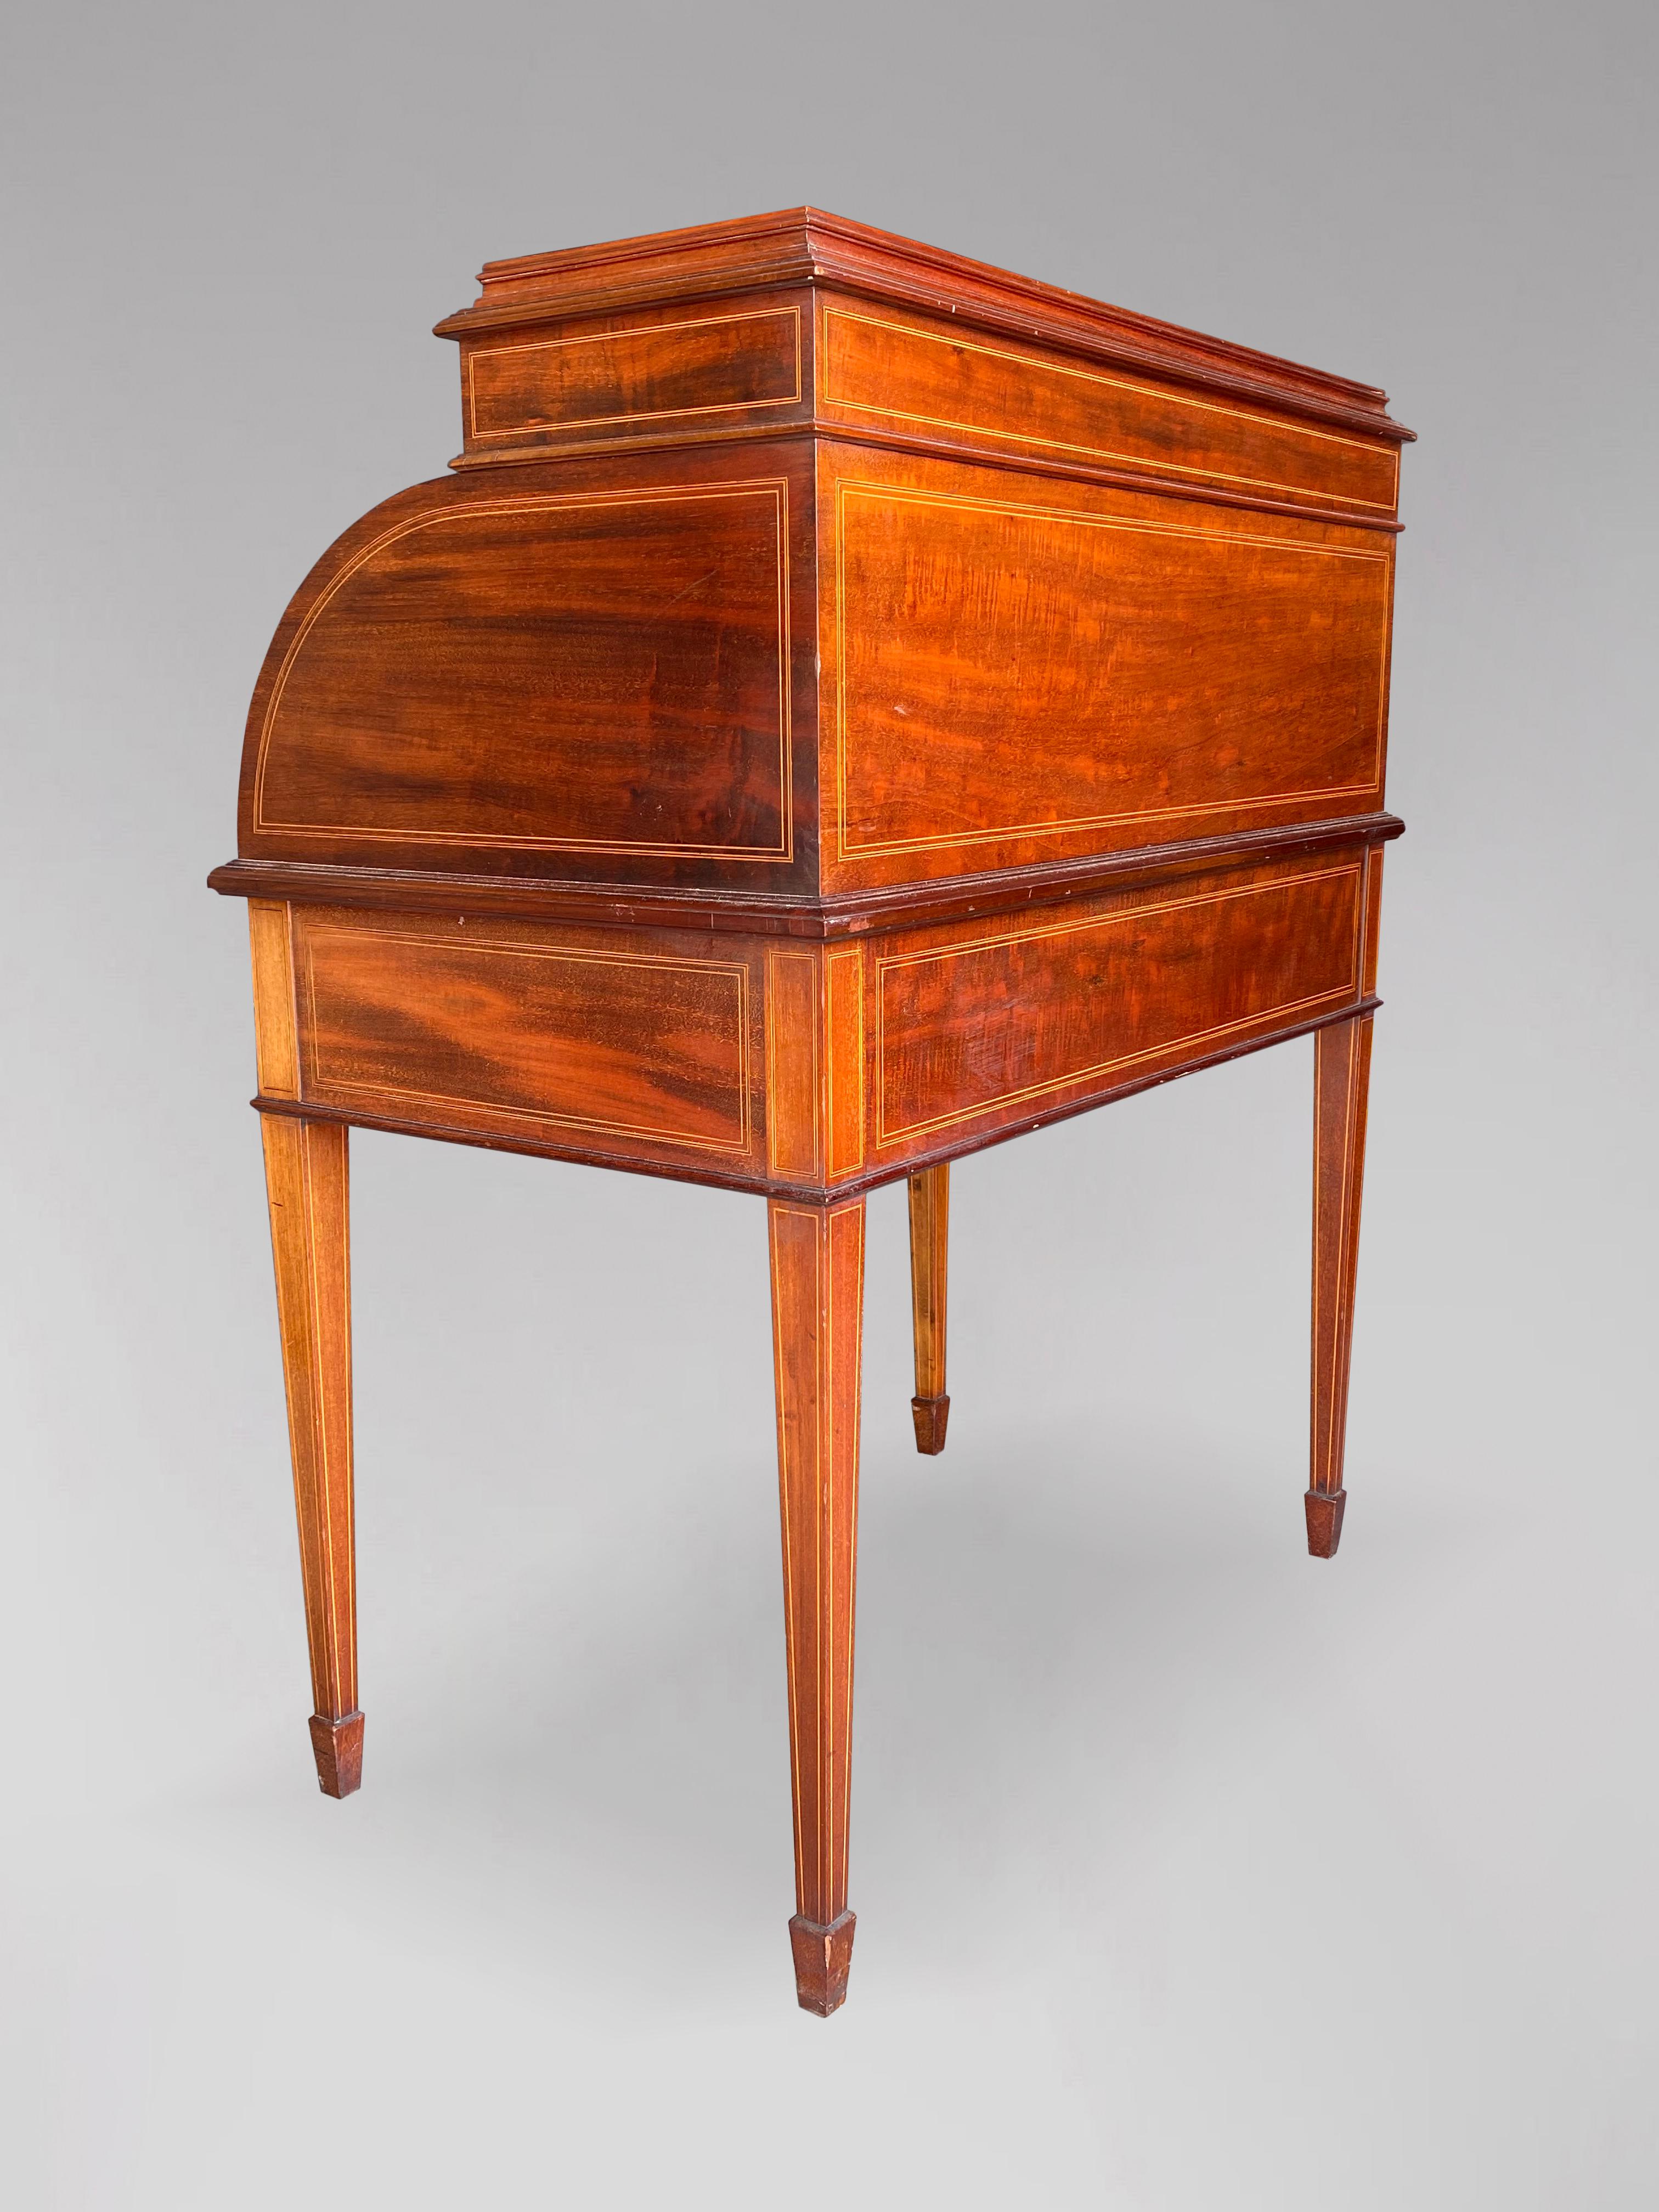 British Edwardian Period Mahogany Cylinder Desk by Maple & Co